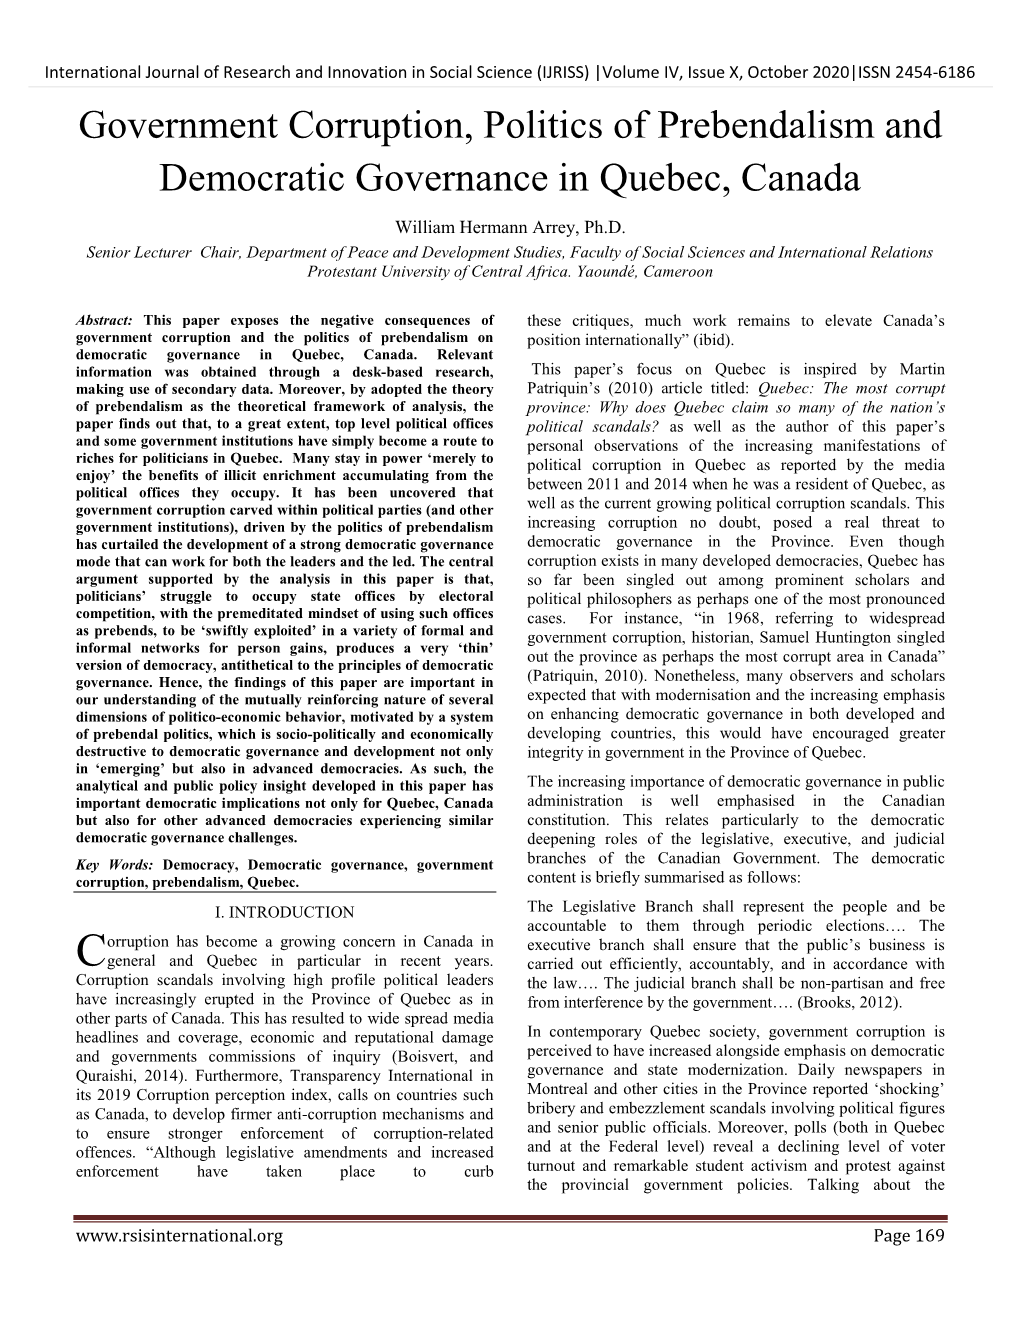 Government Corruption, Politics of Prebendalism and Democratic Governance in Quebec, Canada